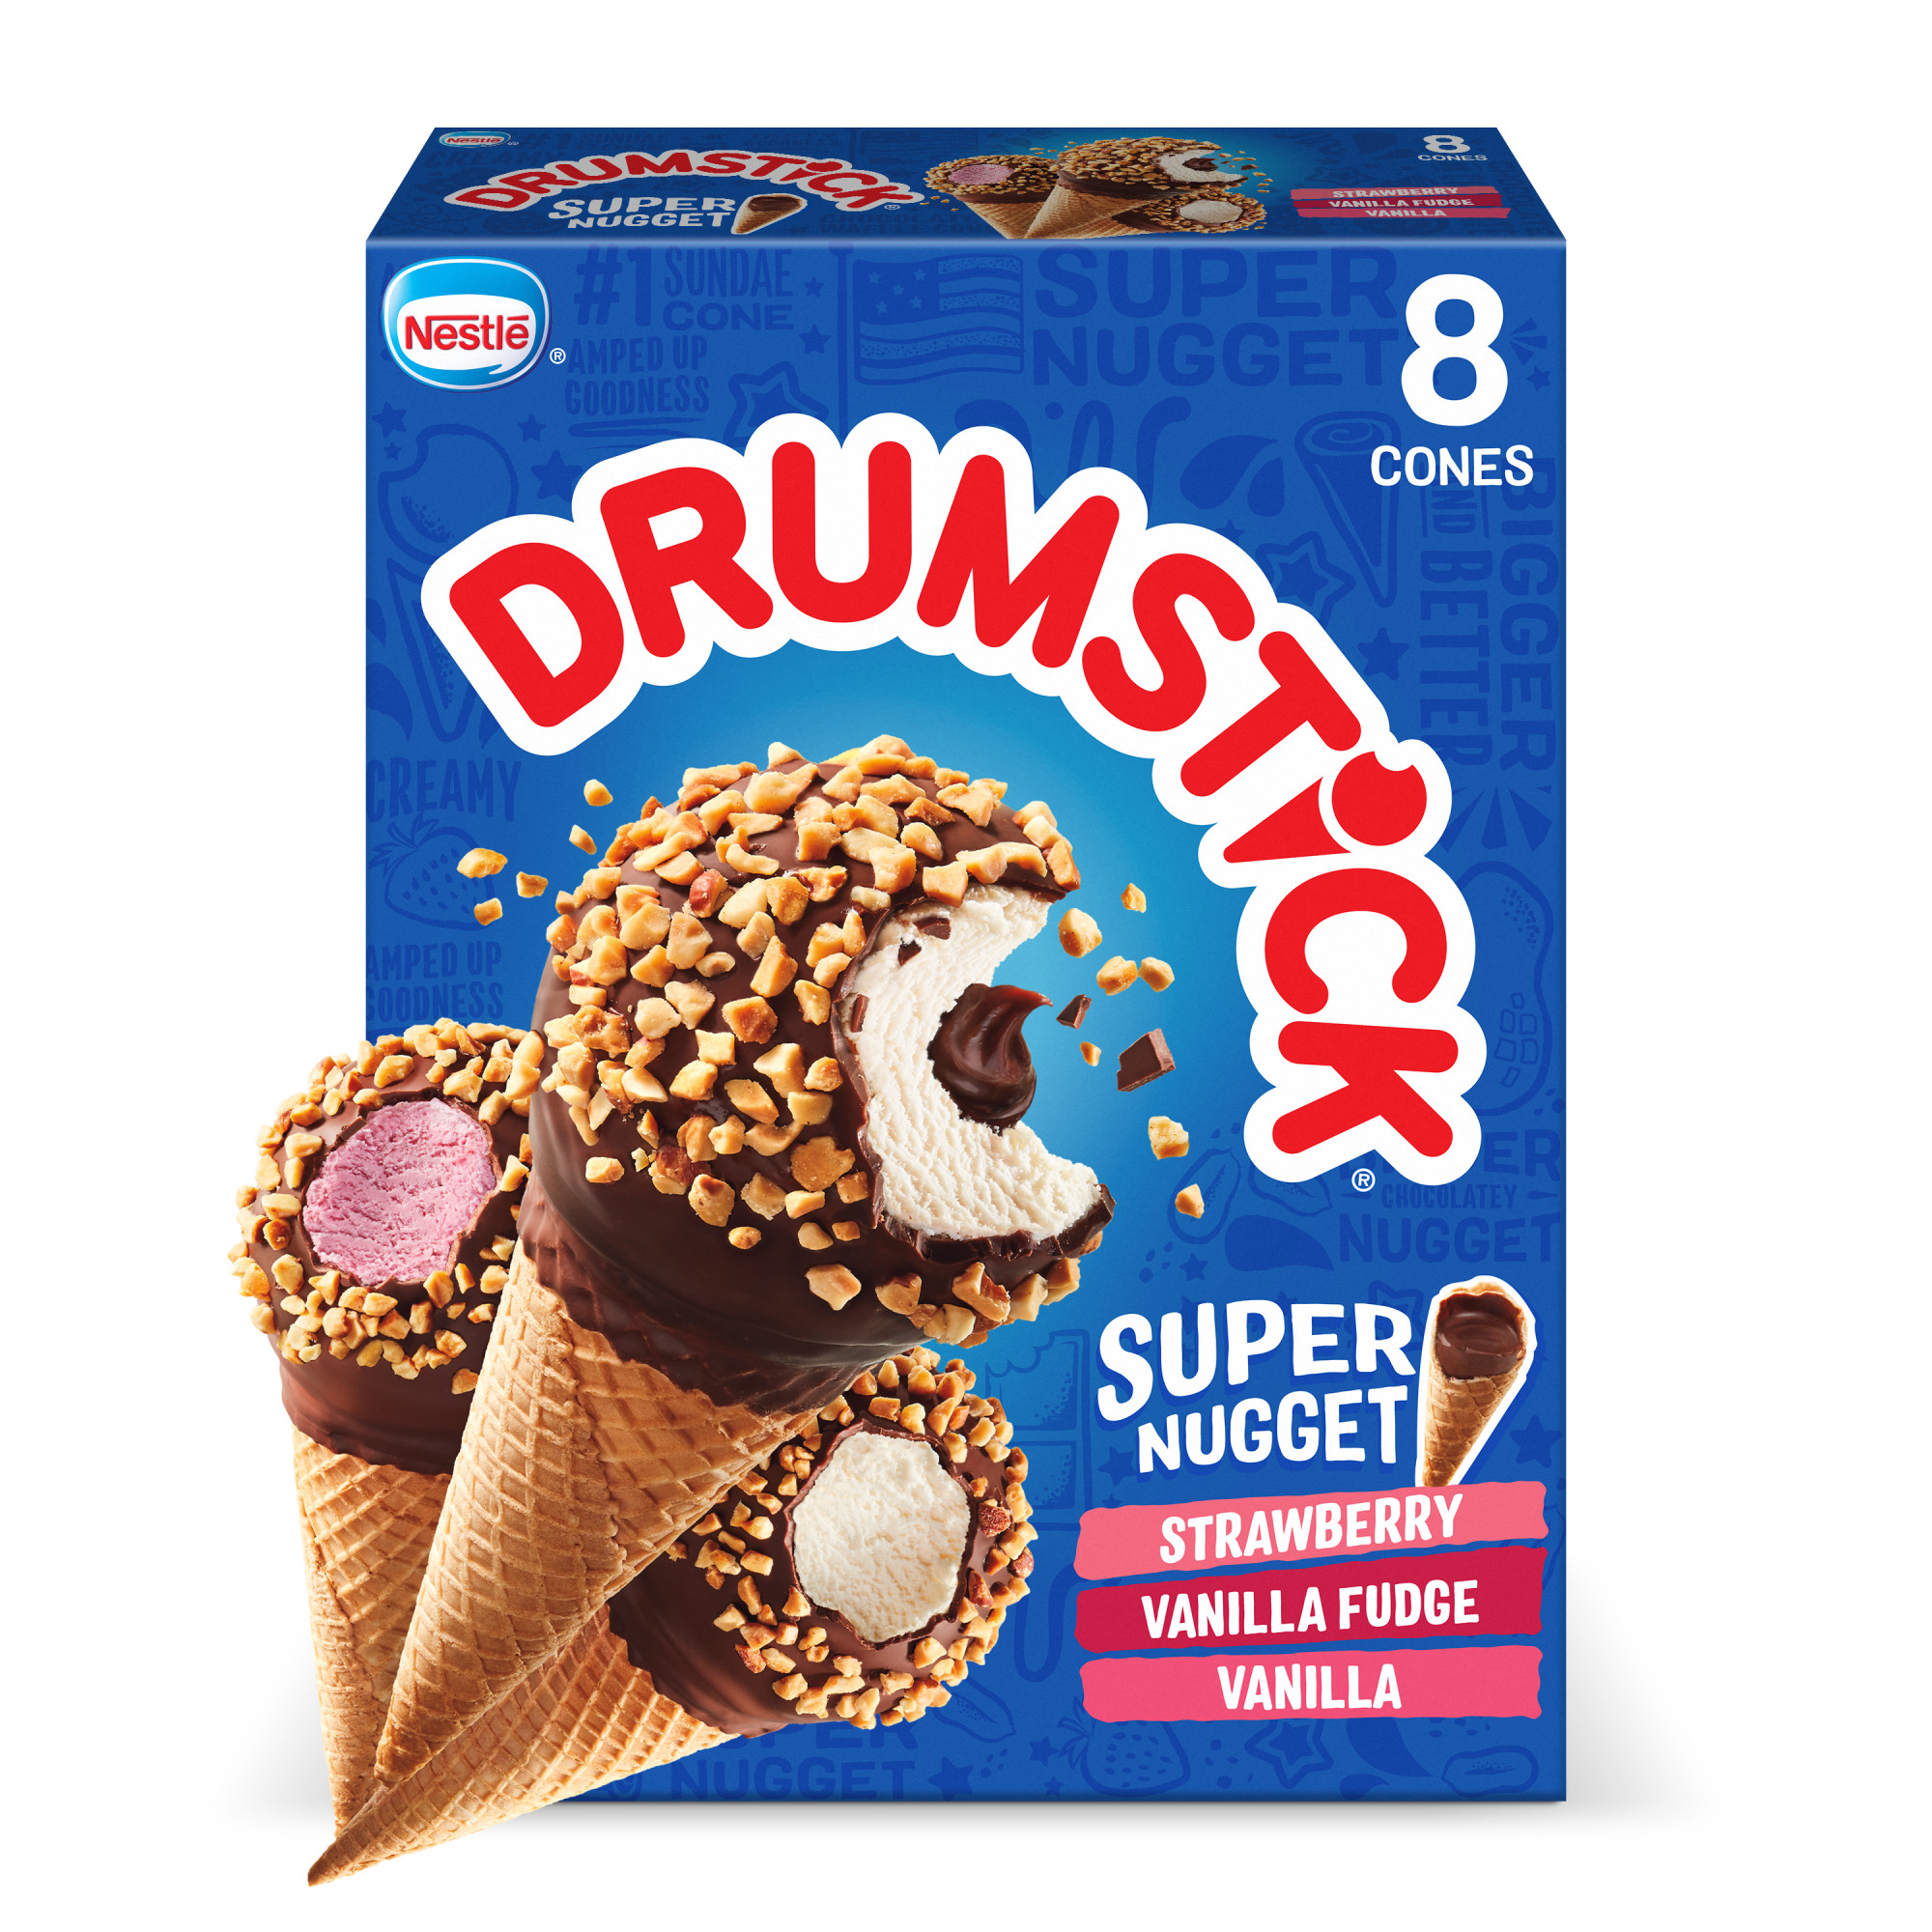 Drumstick Super nuget Ice Cream Cones Variety Pack, 8 Ct - image 1 of 10